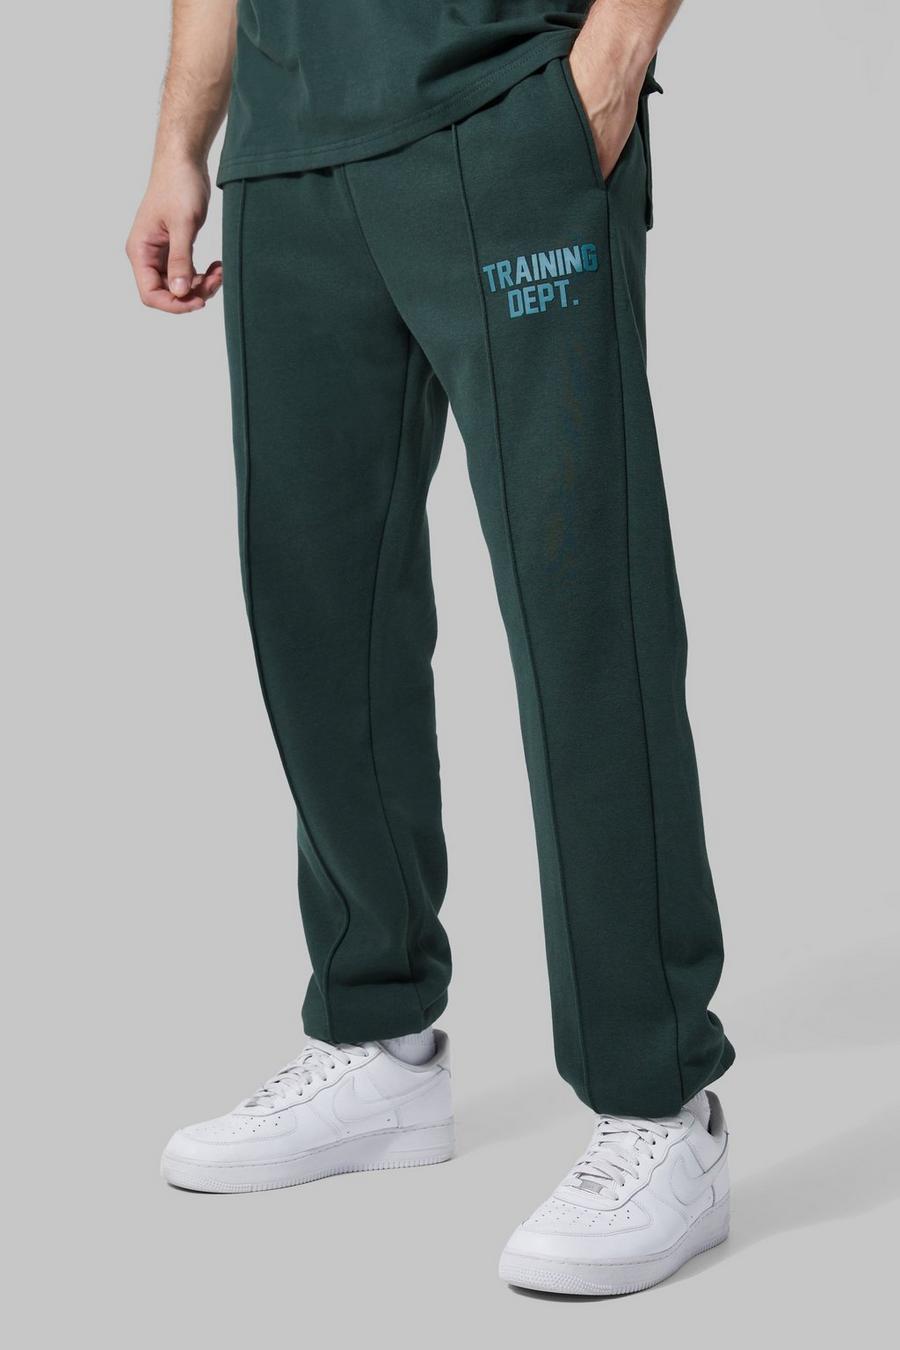 Pantaloni tuta Tall Active Training Dept Slim Fit, Dark green image number 1